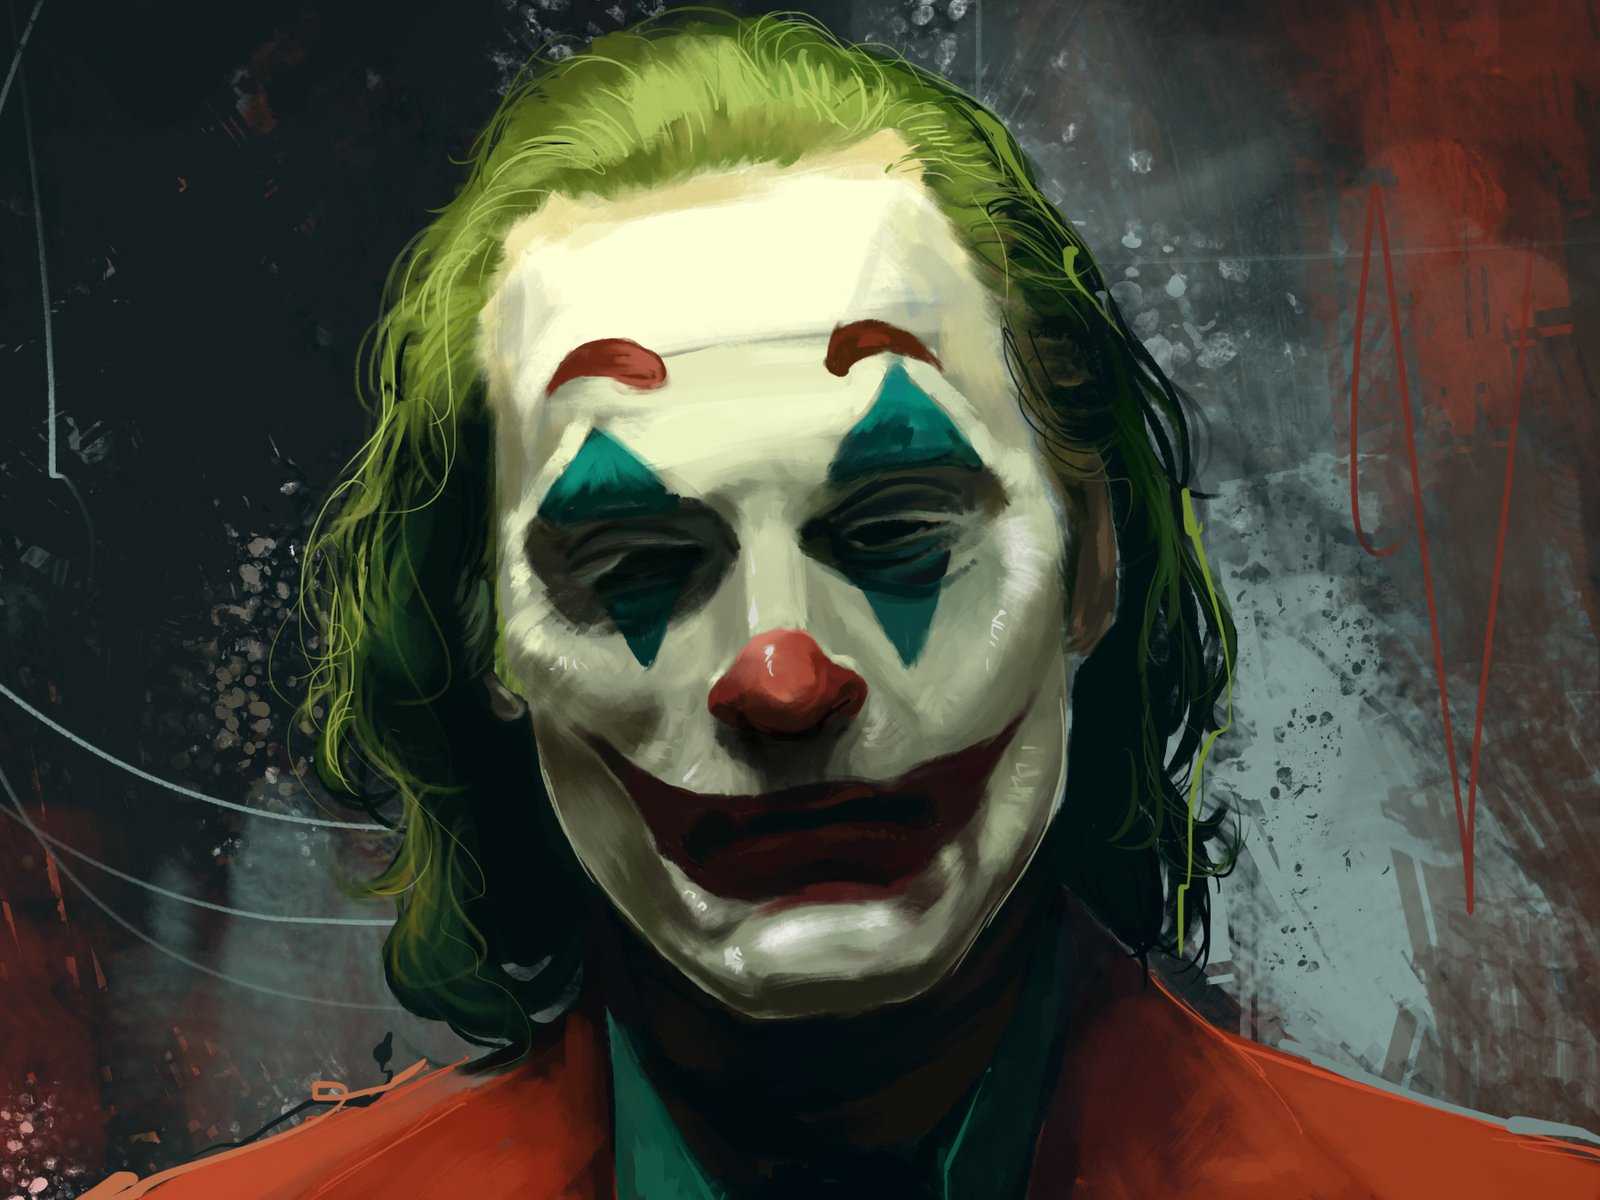 Cool Joker Movie HD Wallpapers - Top Free Cool Joker Movie HD ...